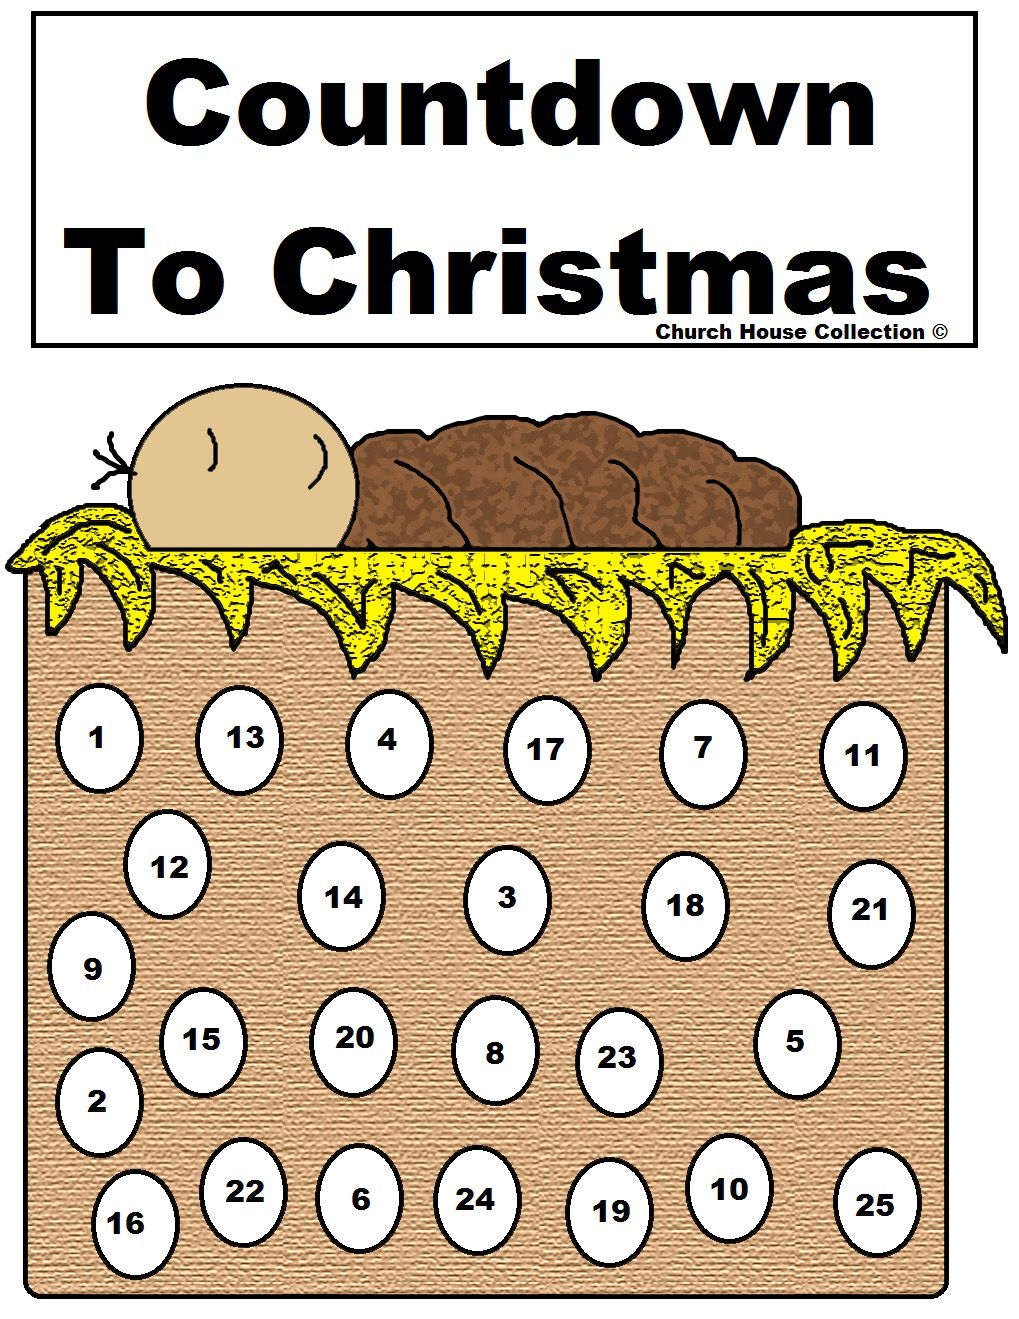 Church House Collection Blog: Baby Jesus Advent Calendar